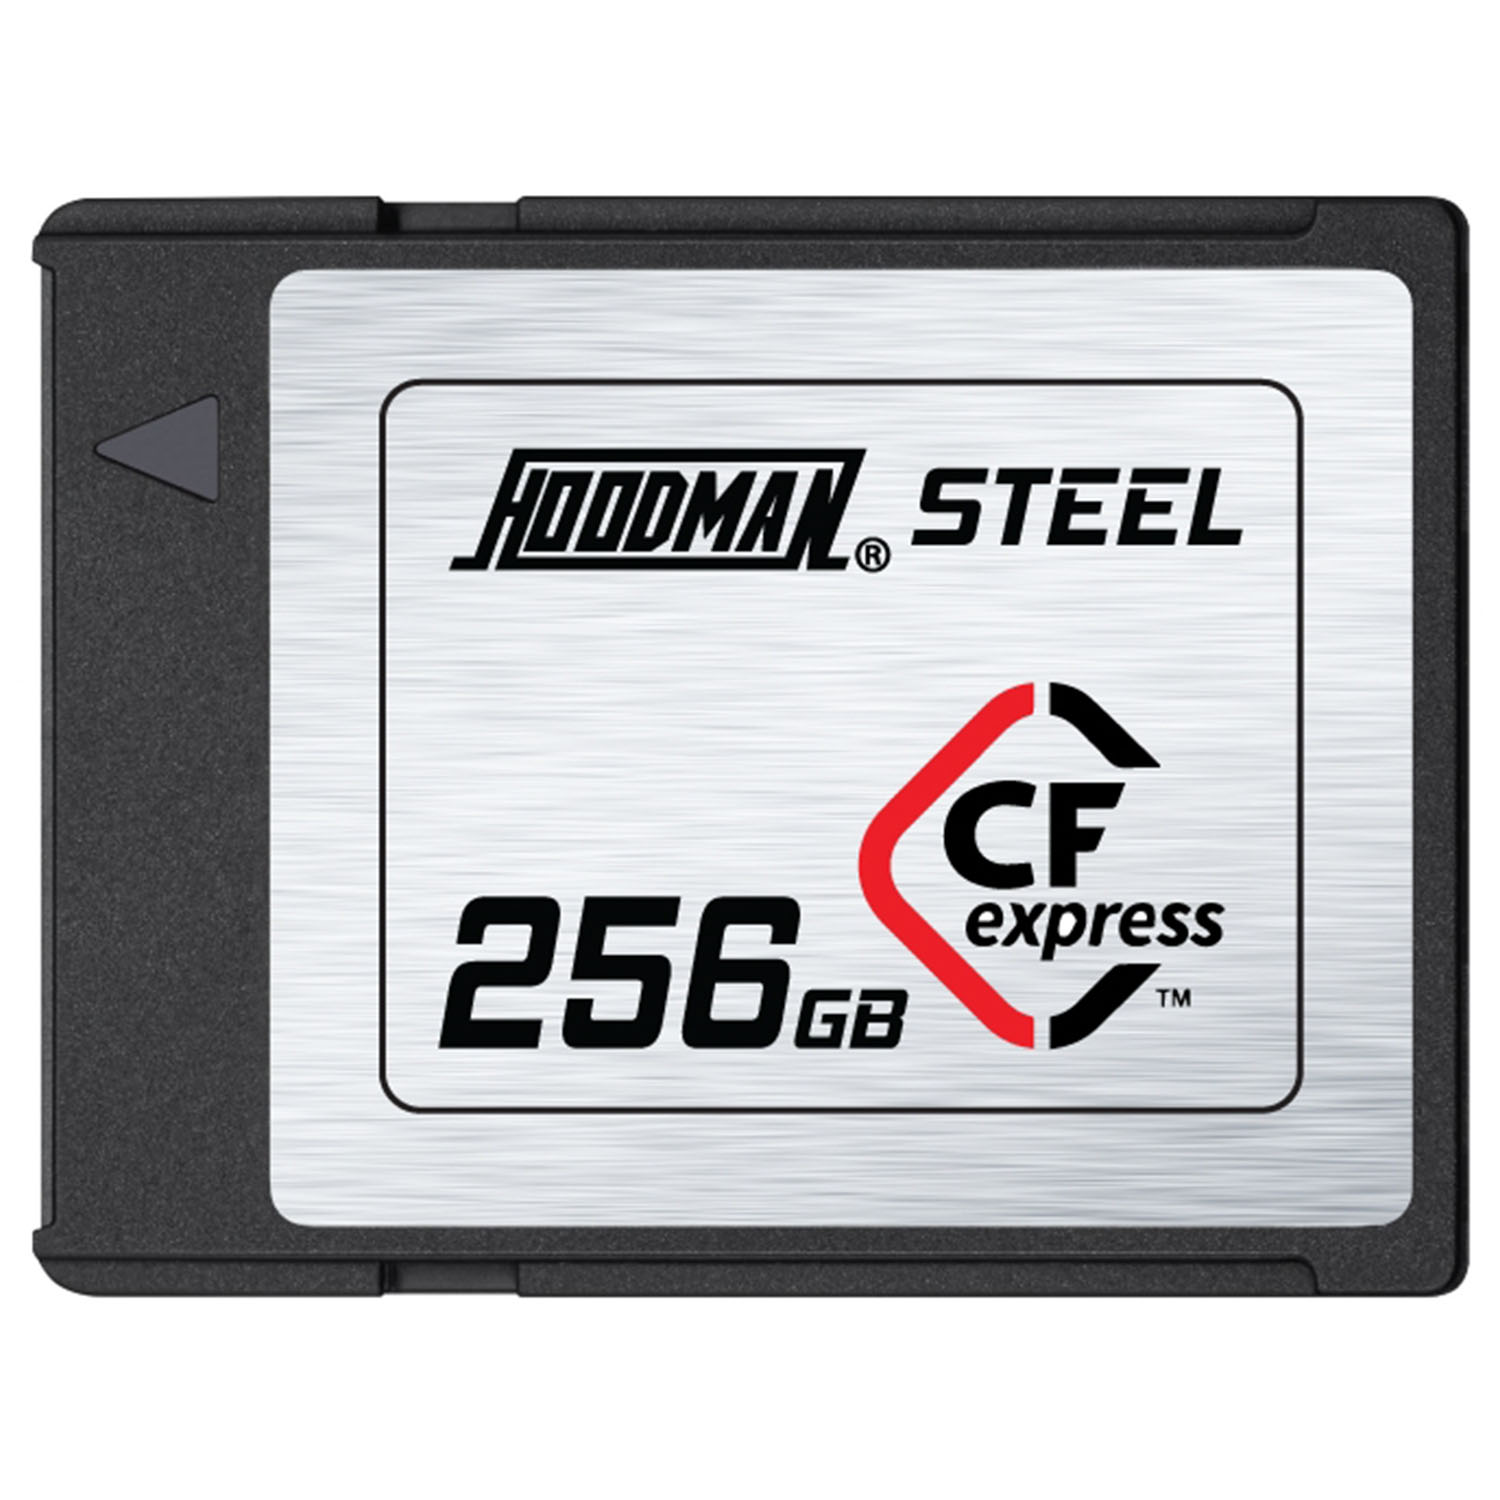 Hoodman CF Express Memory Card